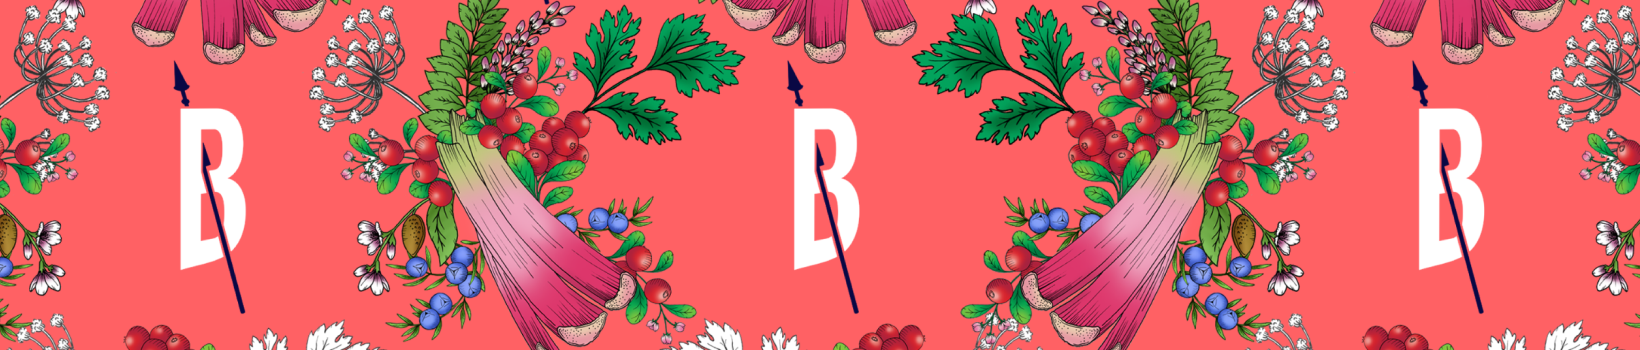 rhubarb cranberry header aspect ratio 1650 352